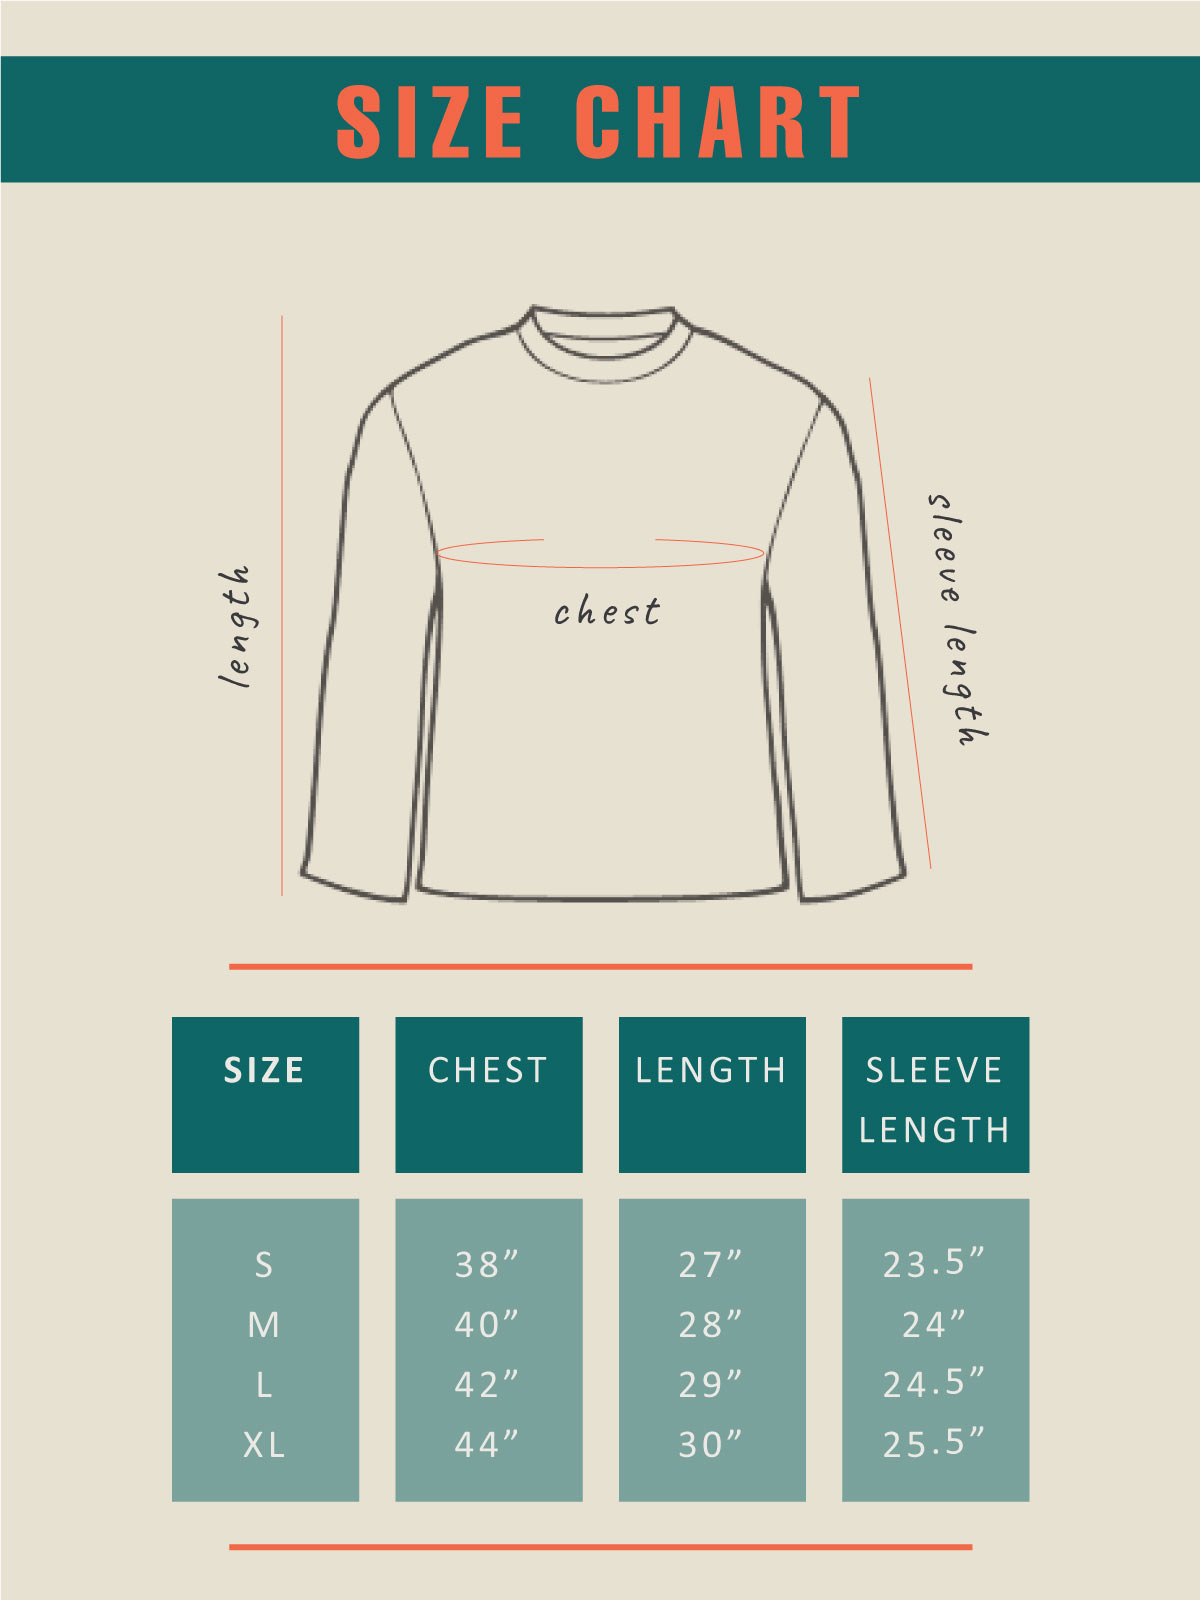 Unisex Tshirts Size chart by Shopghumakkad